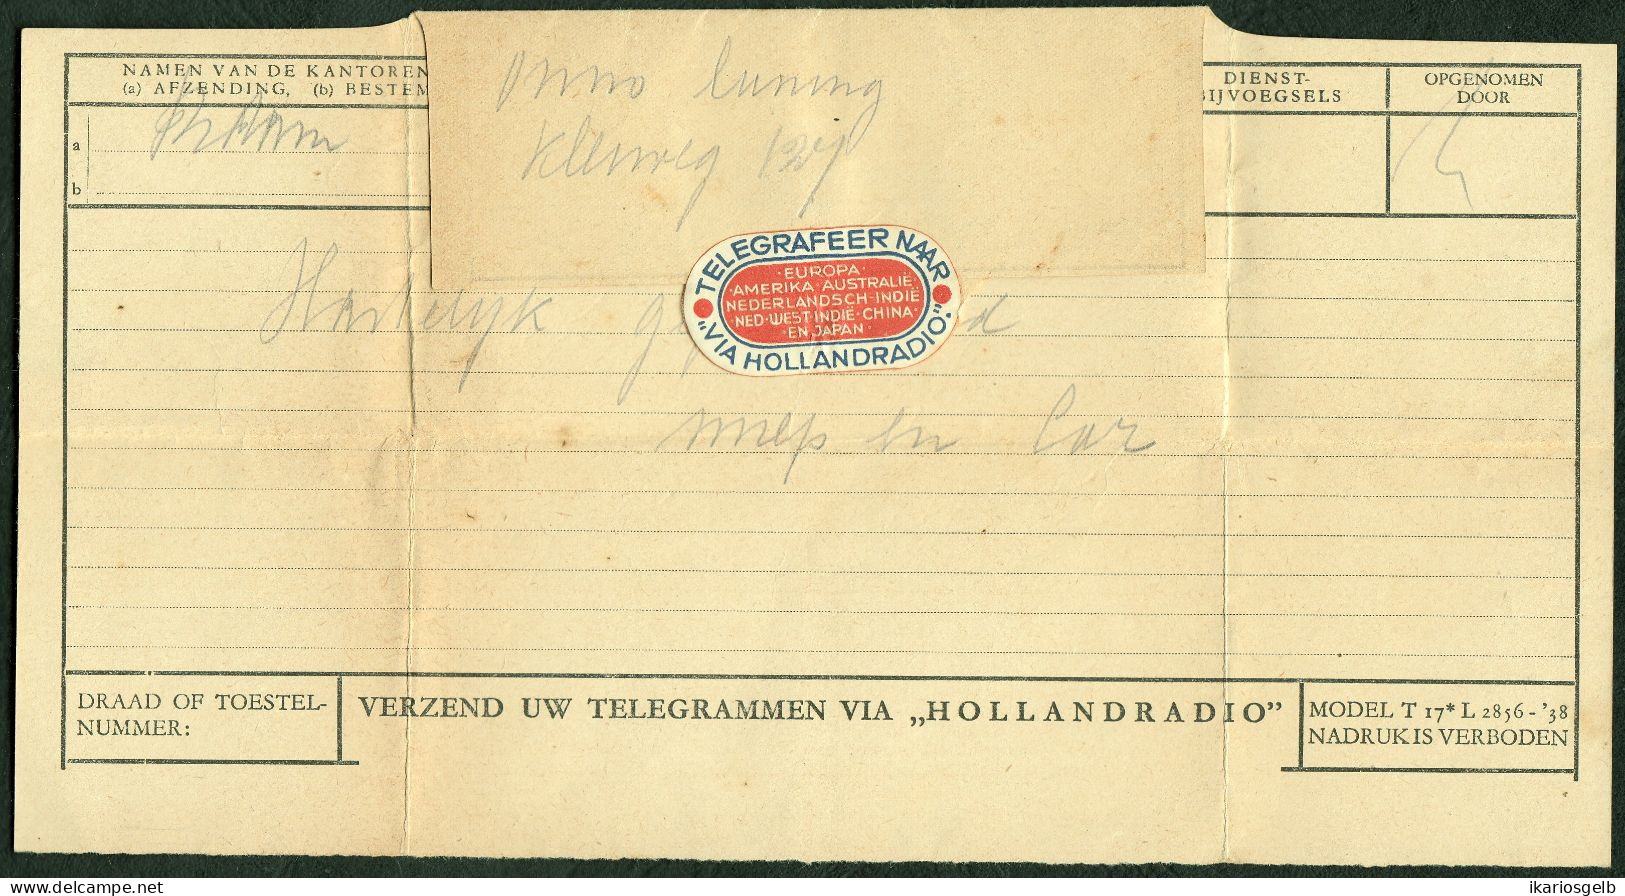 NEDERLAND 1933 Deco Telegramm Telegram + Private Telegraphenmarke "Via Hollandradio" Sluitzegel - Telegraphenmarken